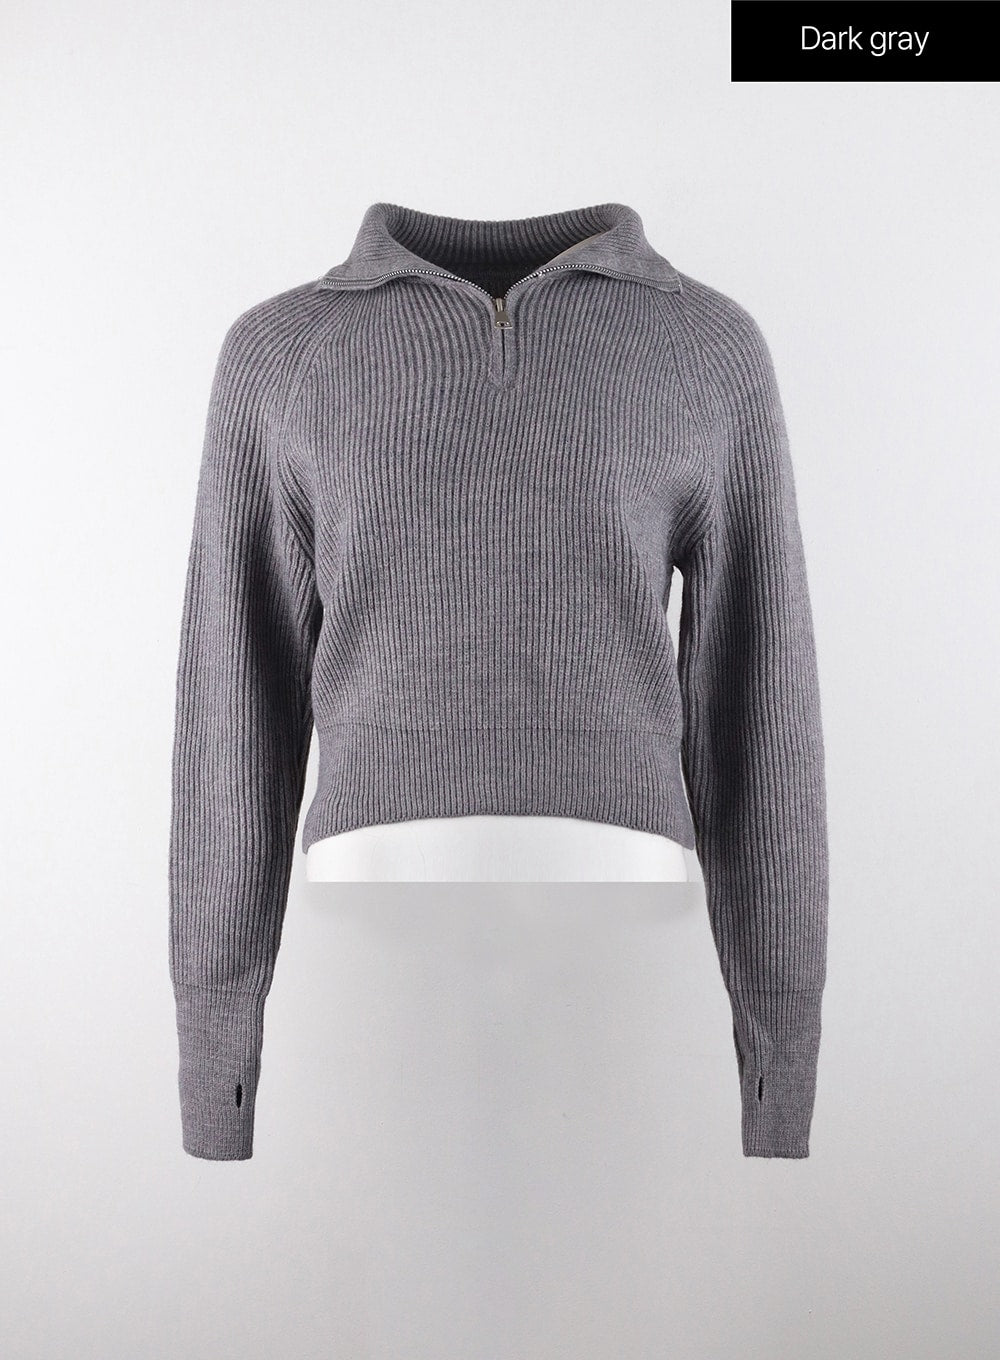 half-neck-zip-sweater-od321 / Dark gray